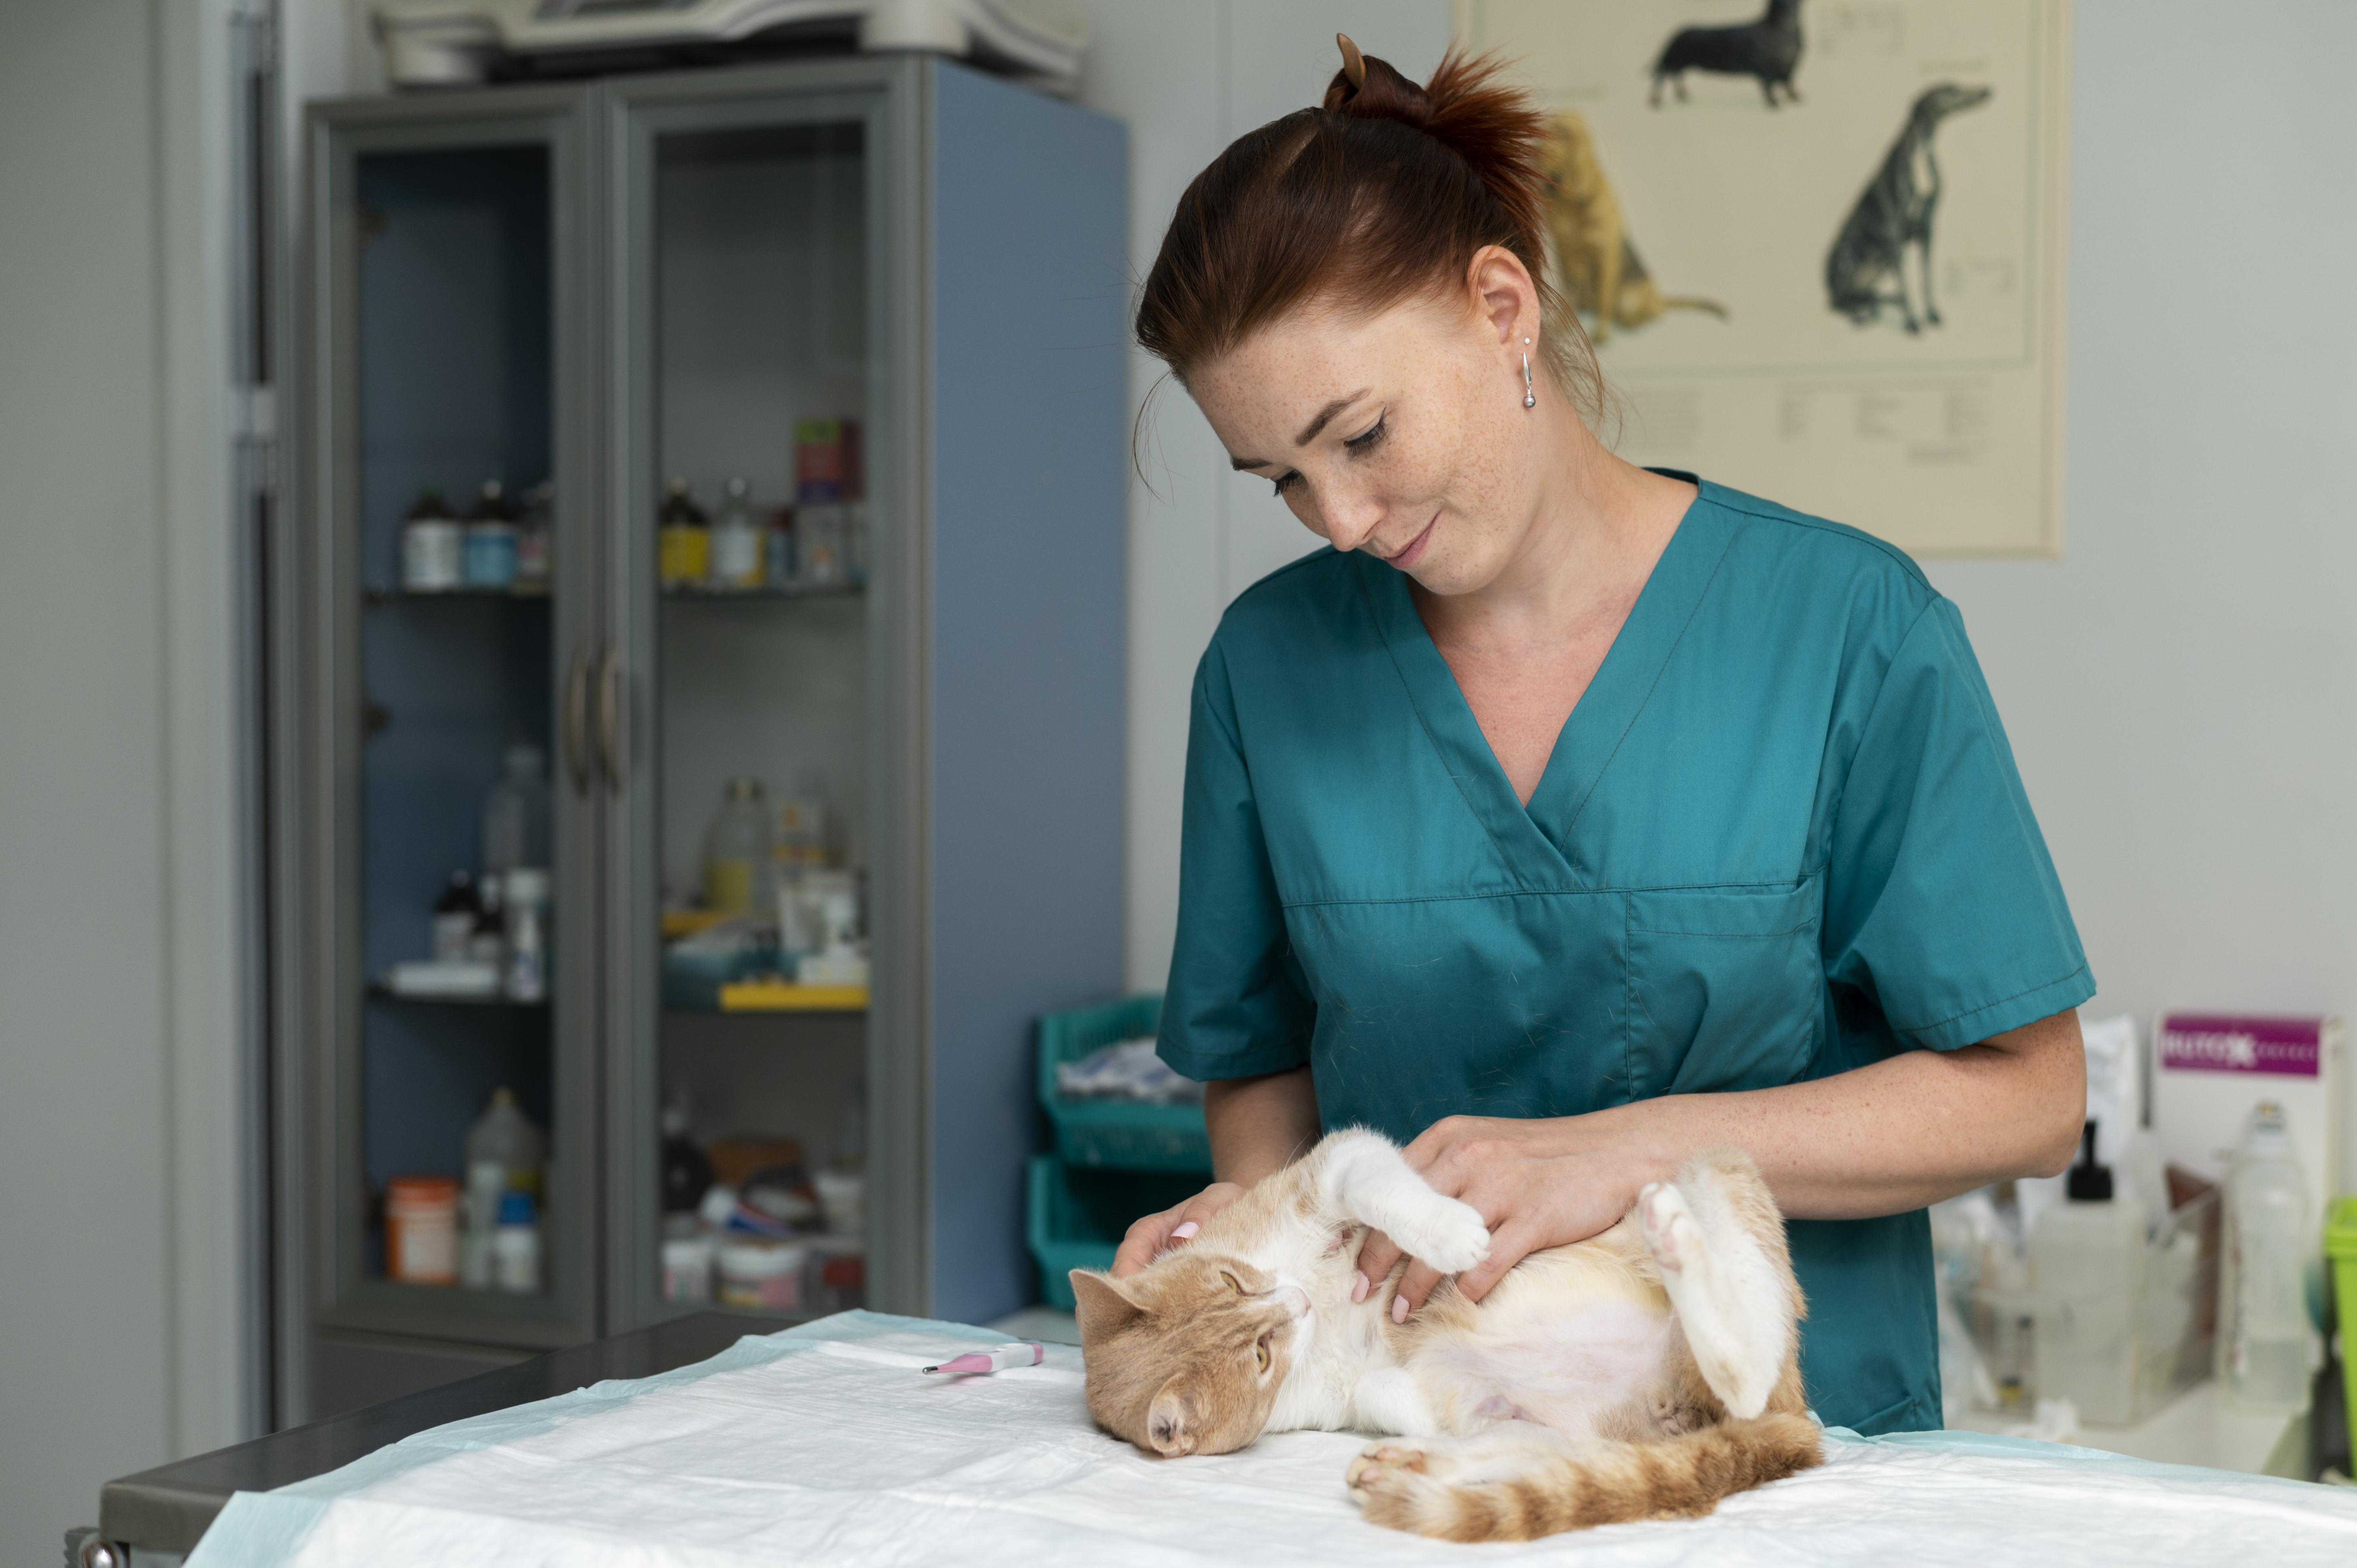 Pronto soccorso veterinario: cosa succede durante una visita di emergenza 